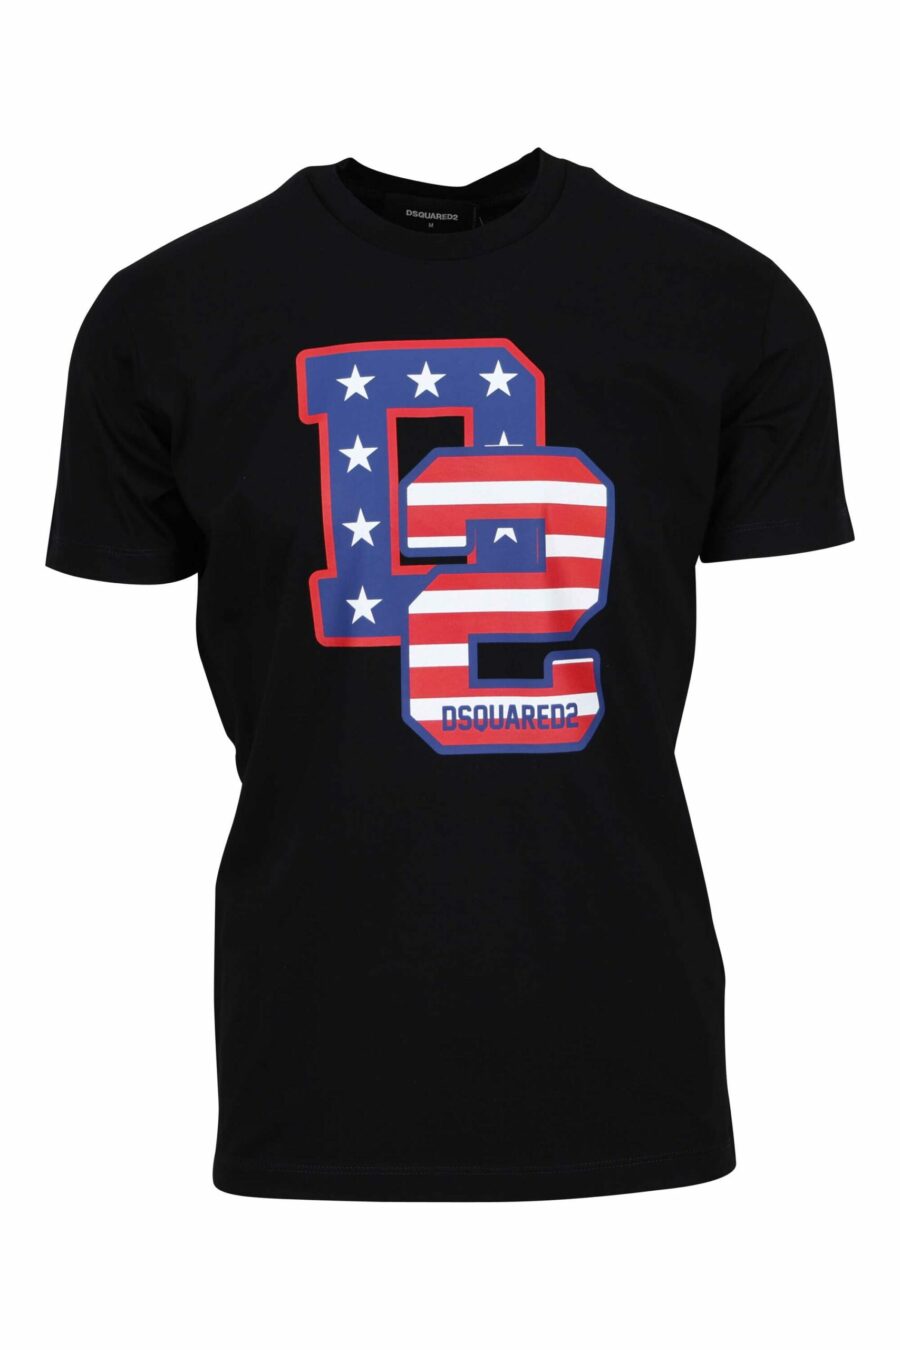 Camiseta negra con maxilogo "D2" bandera - 8054148332518 scaled